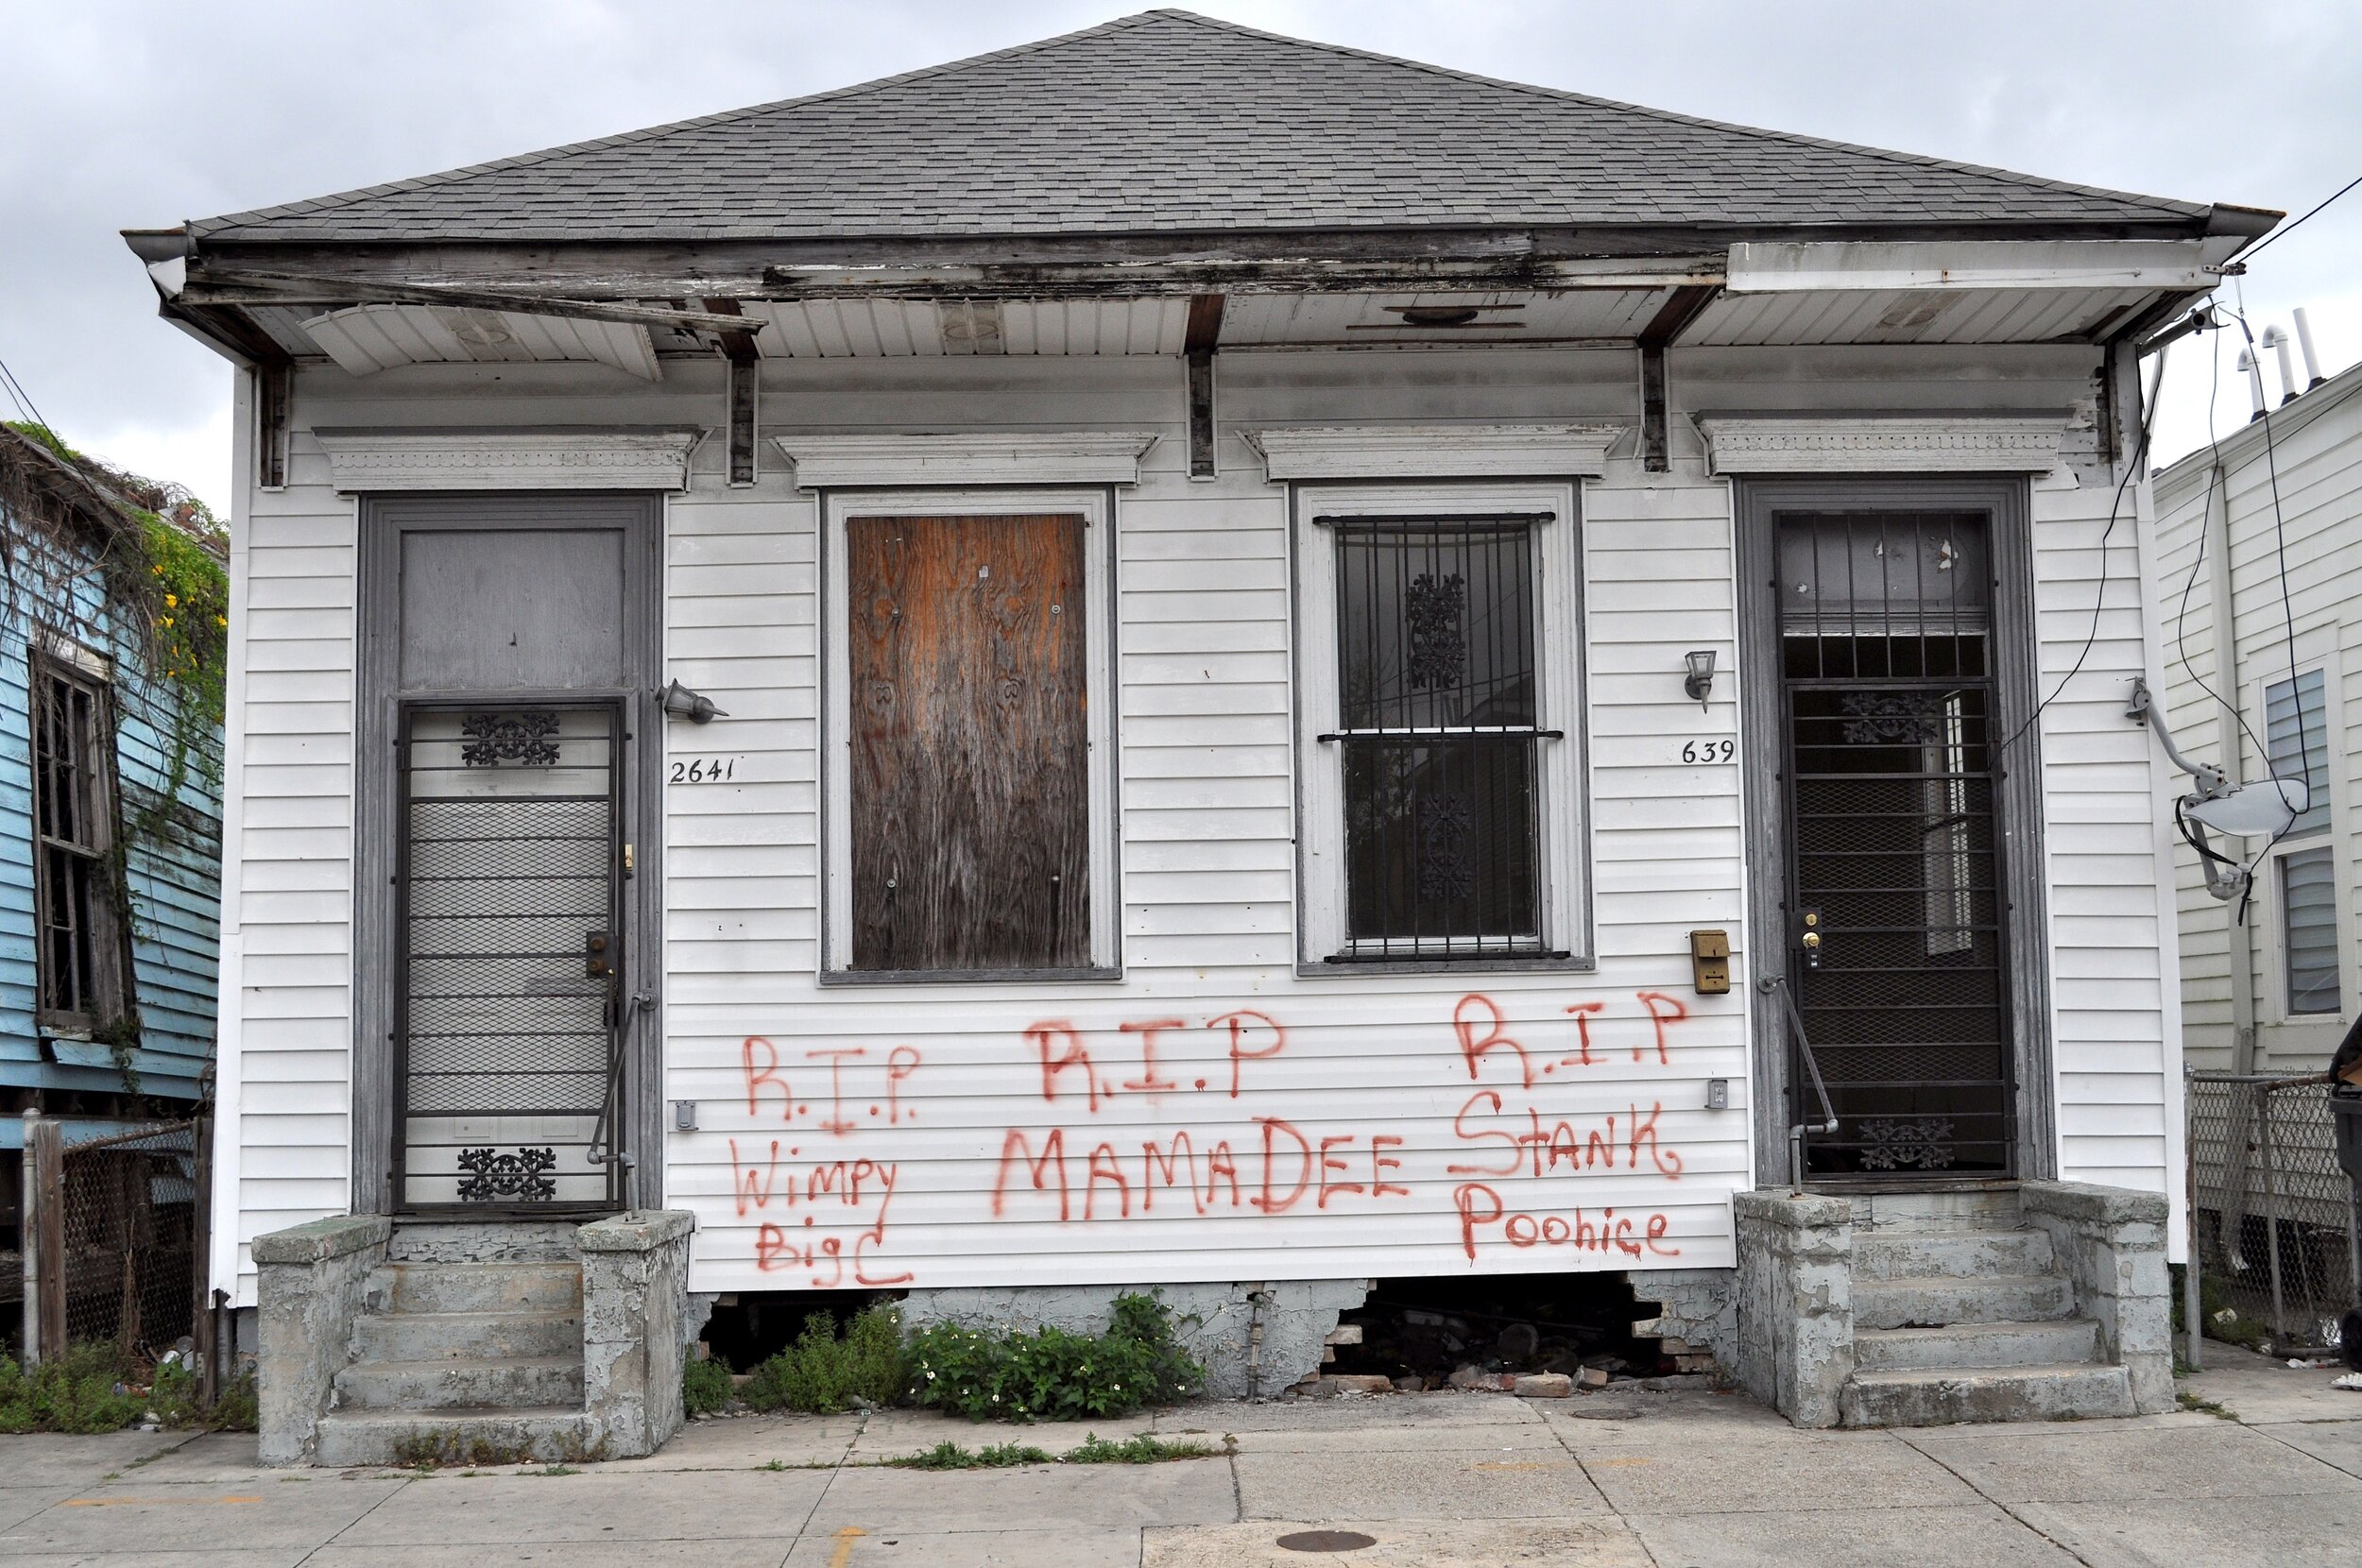 R.I.P. Mama Dee - New Orleans, Louisiana (2015)